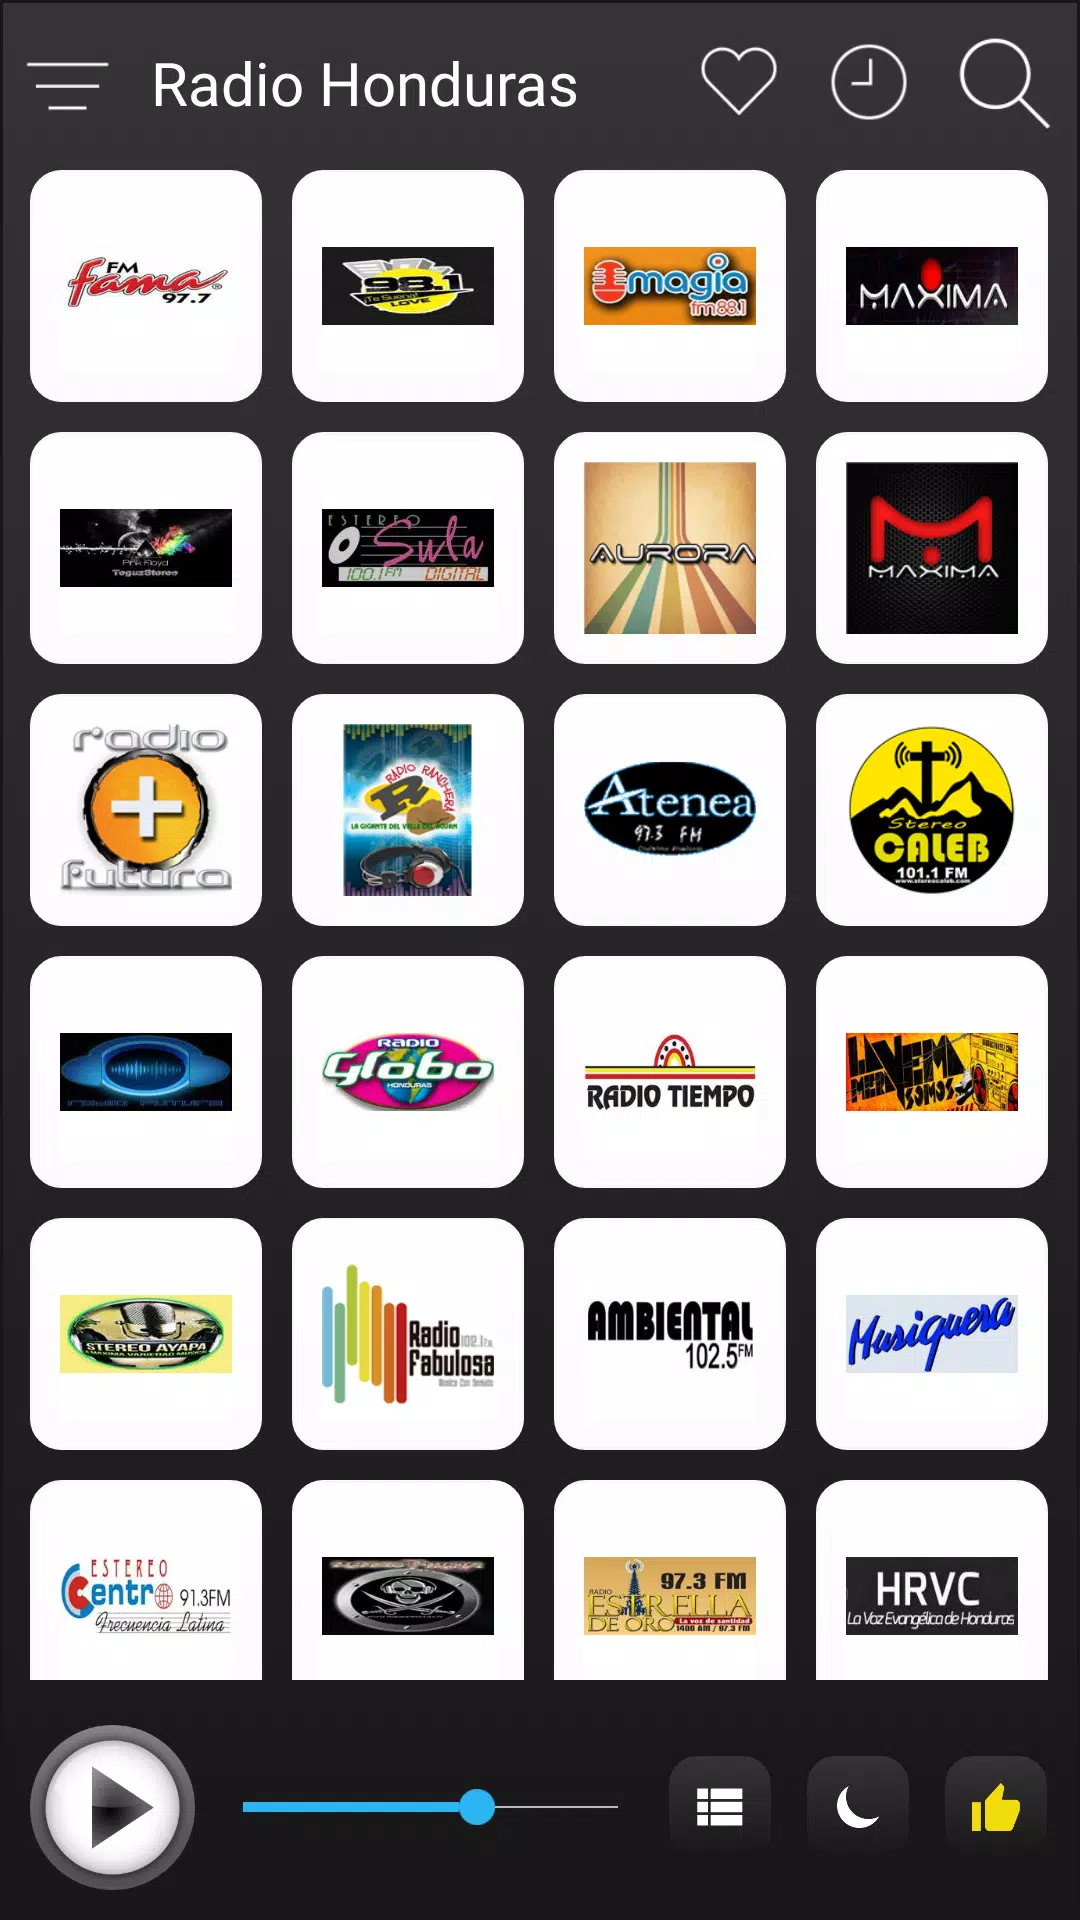 Honduras Radio Stations Online - Honduras FM AM for Android - APK Download